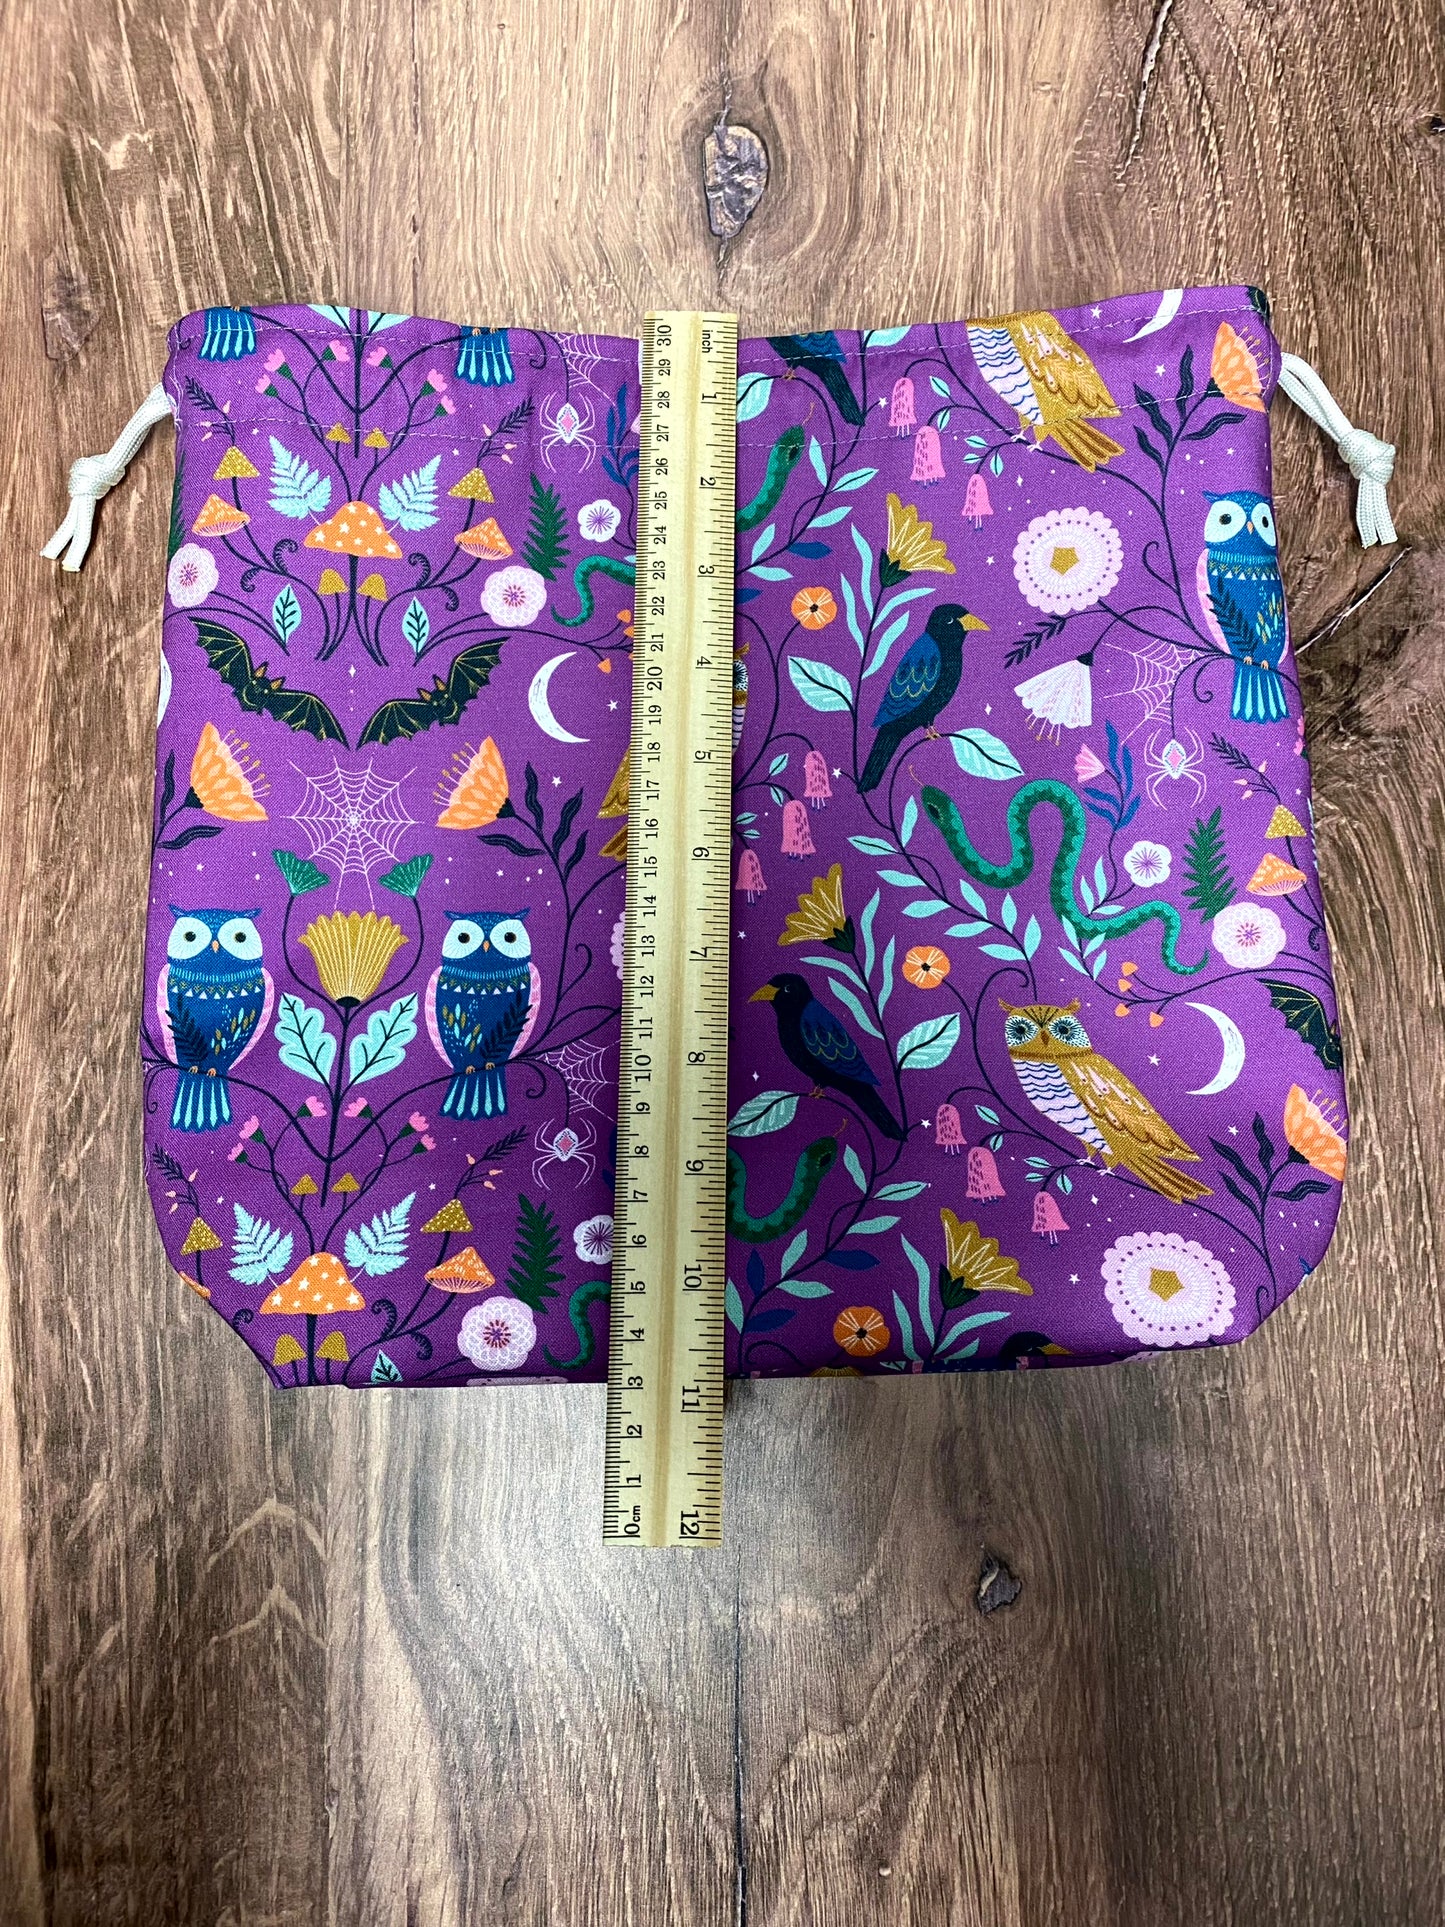 Owl Project Bag - Handmade - Drawstring Bag – Knitting Bag – Crochet Bag - Toy Sack - Bingo Bag – Cross Stitch Bag - Bird - Floral